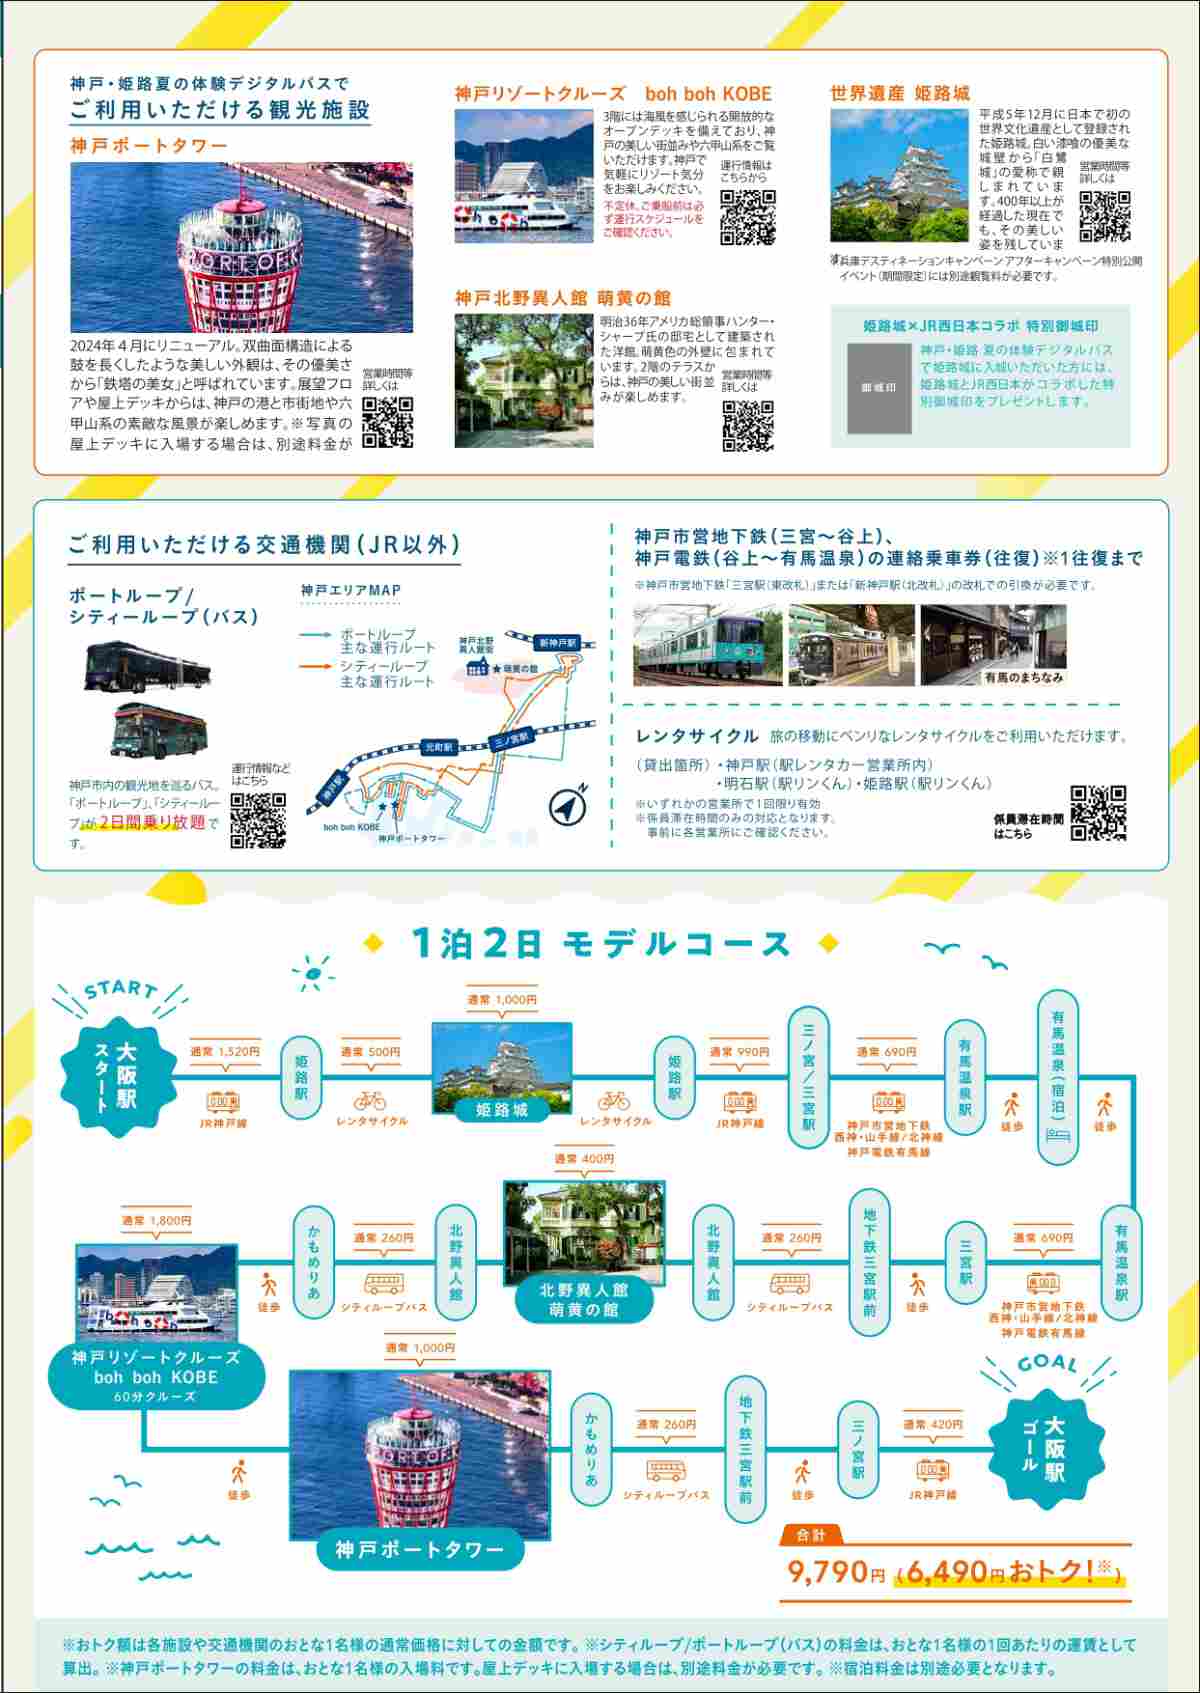 JR西日本が「ひょうご夏の体験デジタルパス（3日間）」「神戸・姫路 夏の体験デジタルパス（2日間）」の販売開始　神戸市など [画像]